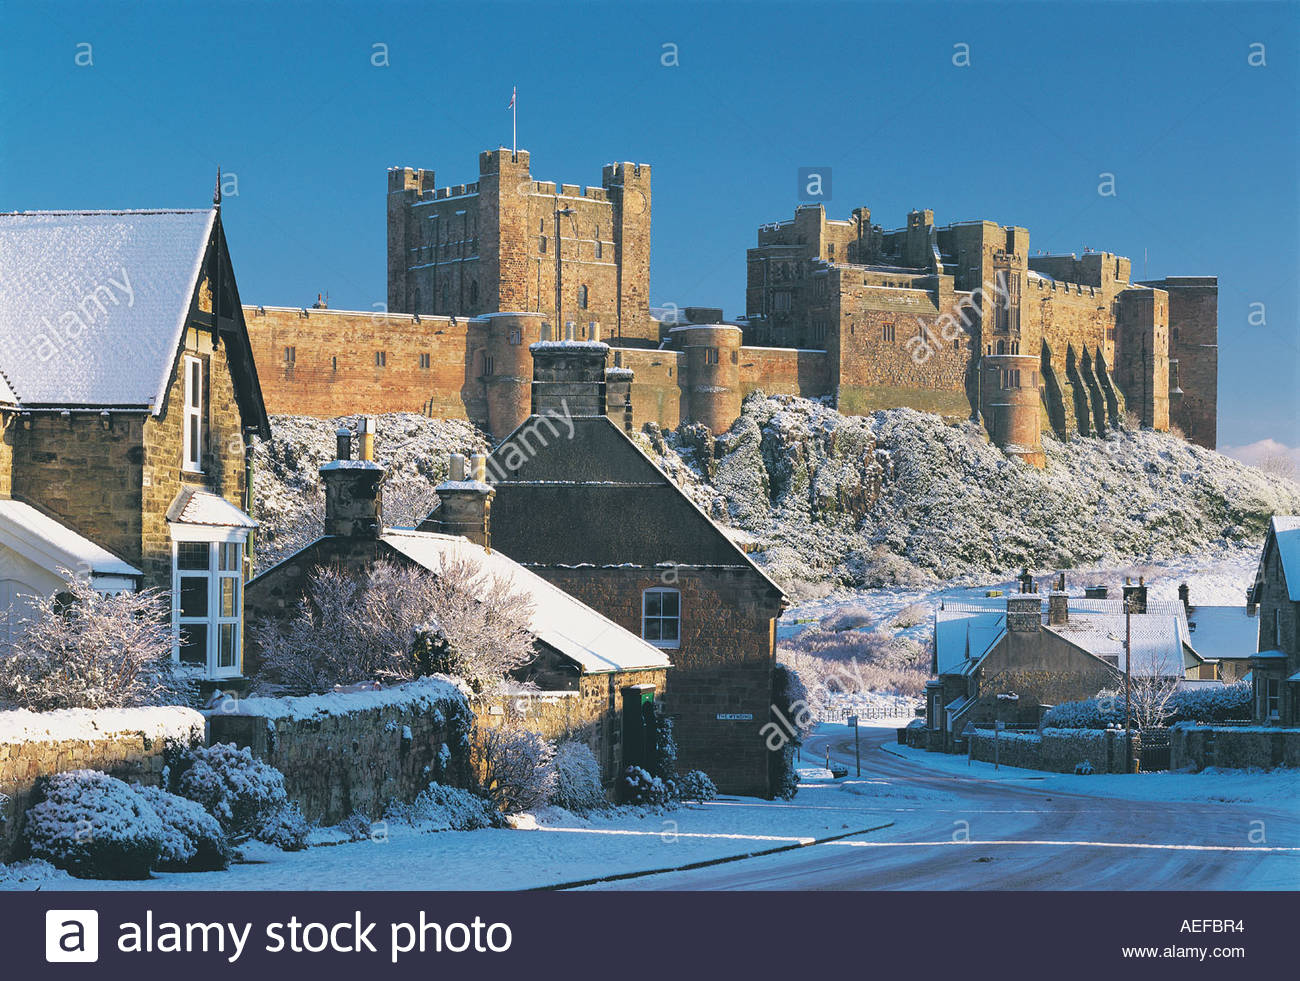 Nice Images Collection: Bamburgh Castle Desktop Wallpapers